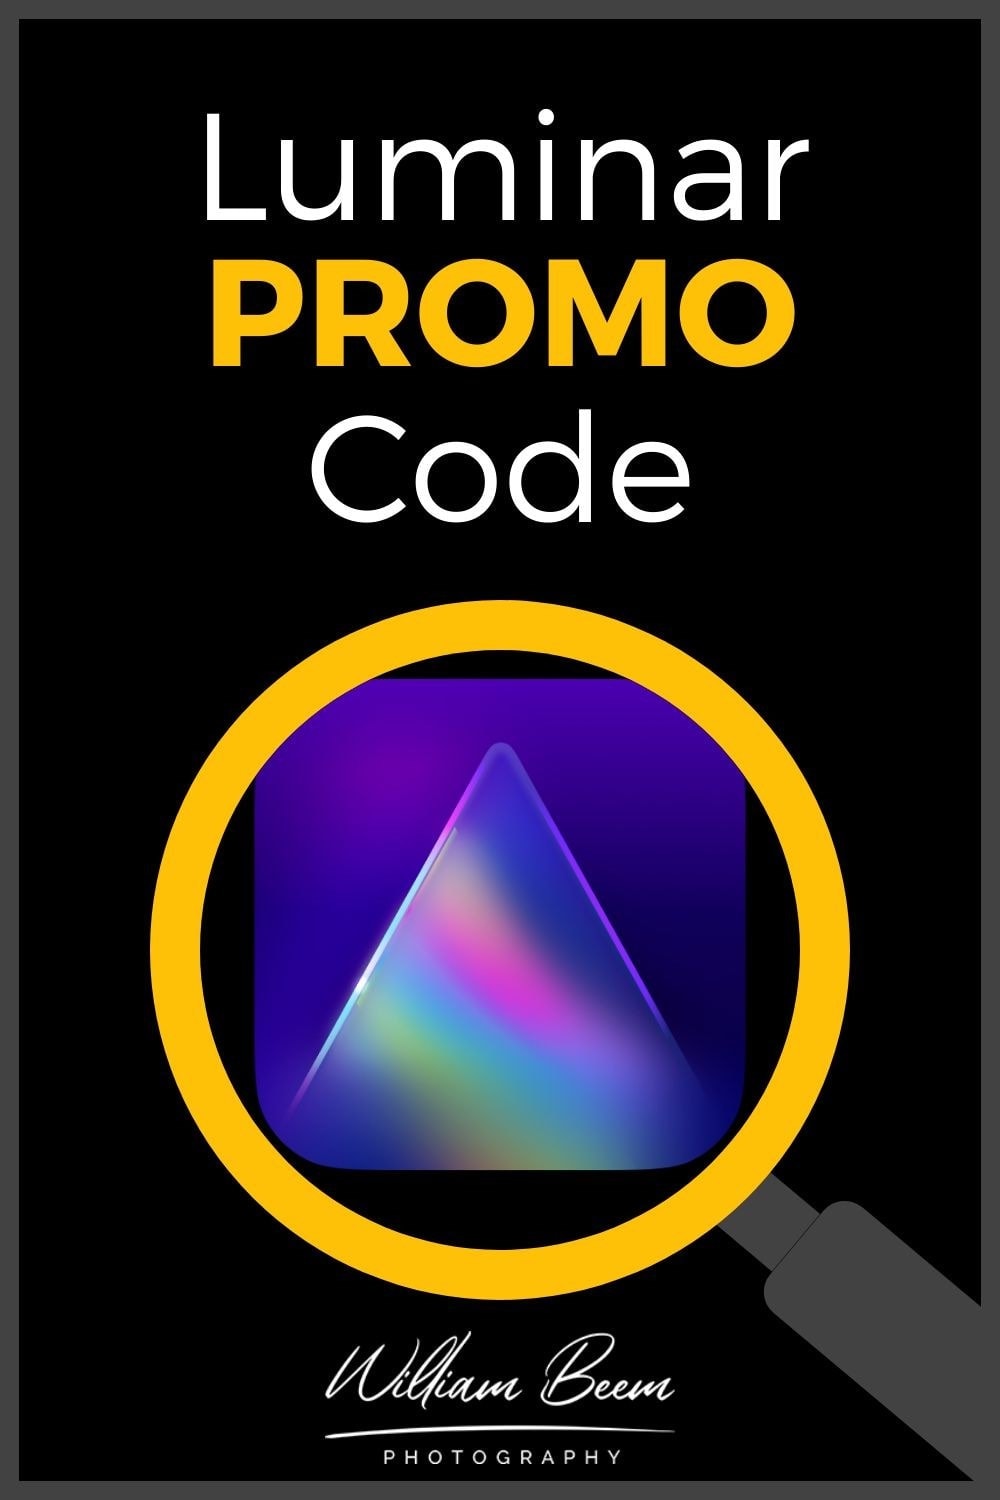 Luminar Promo Code